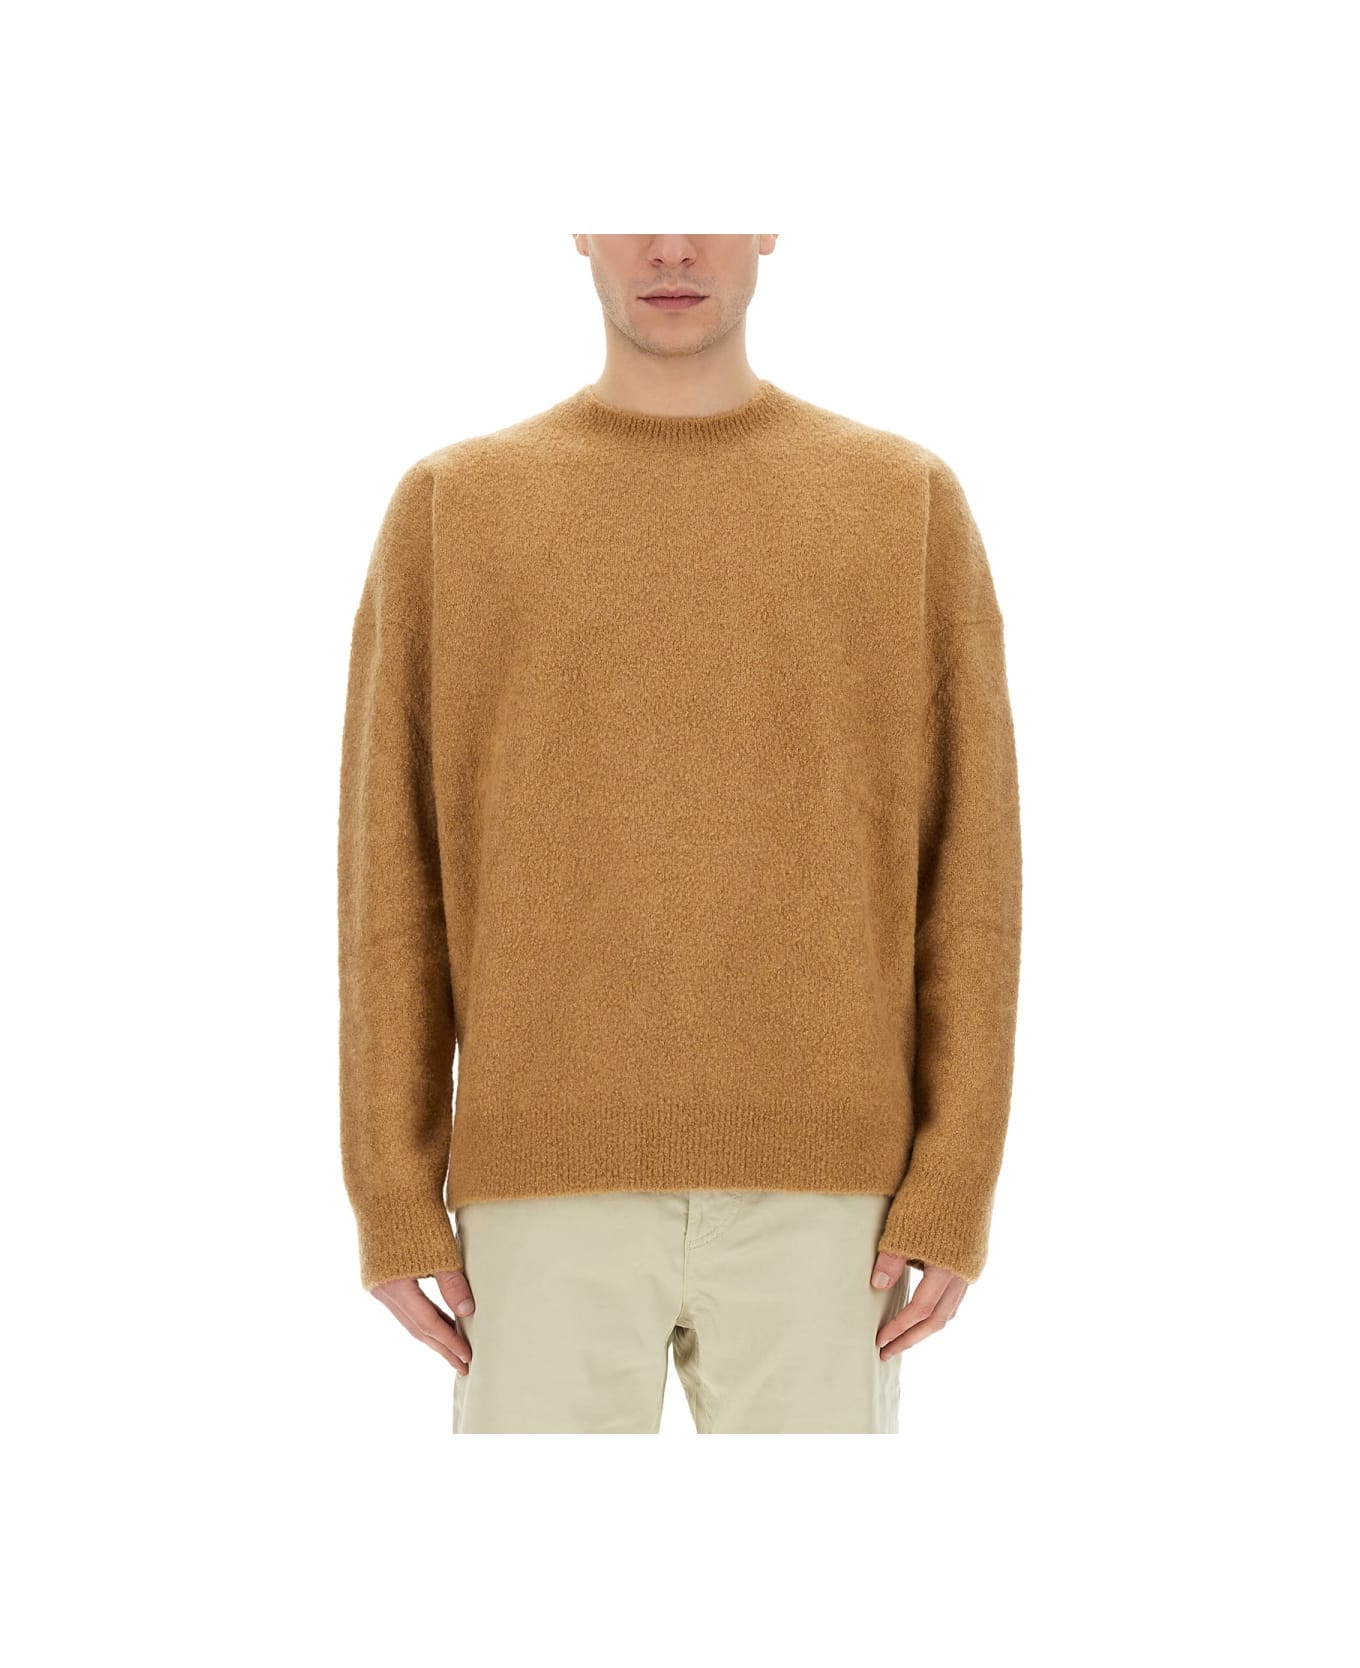 Hugo Boss Cashmere Sweater - BEIGE